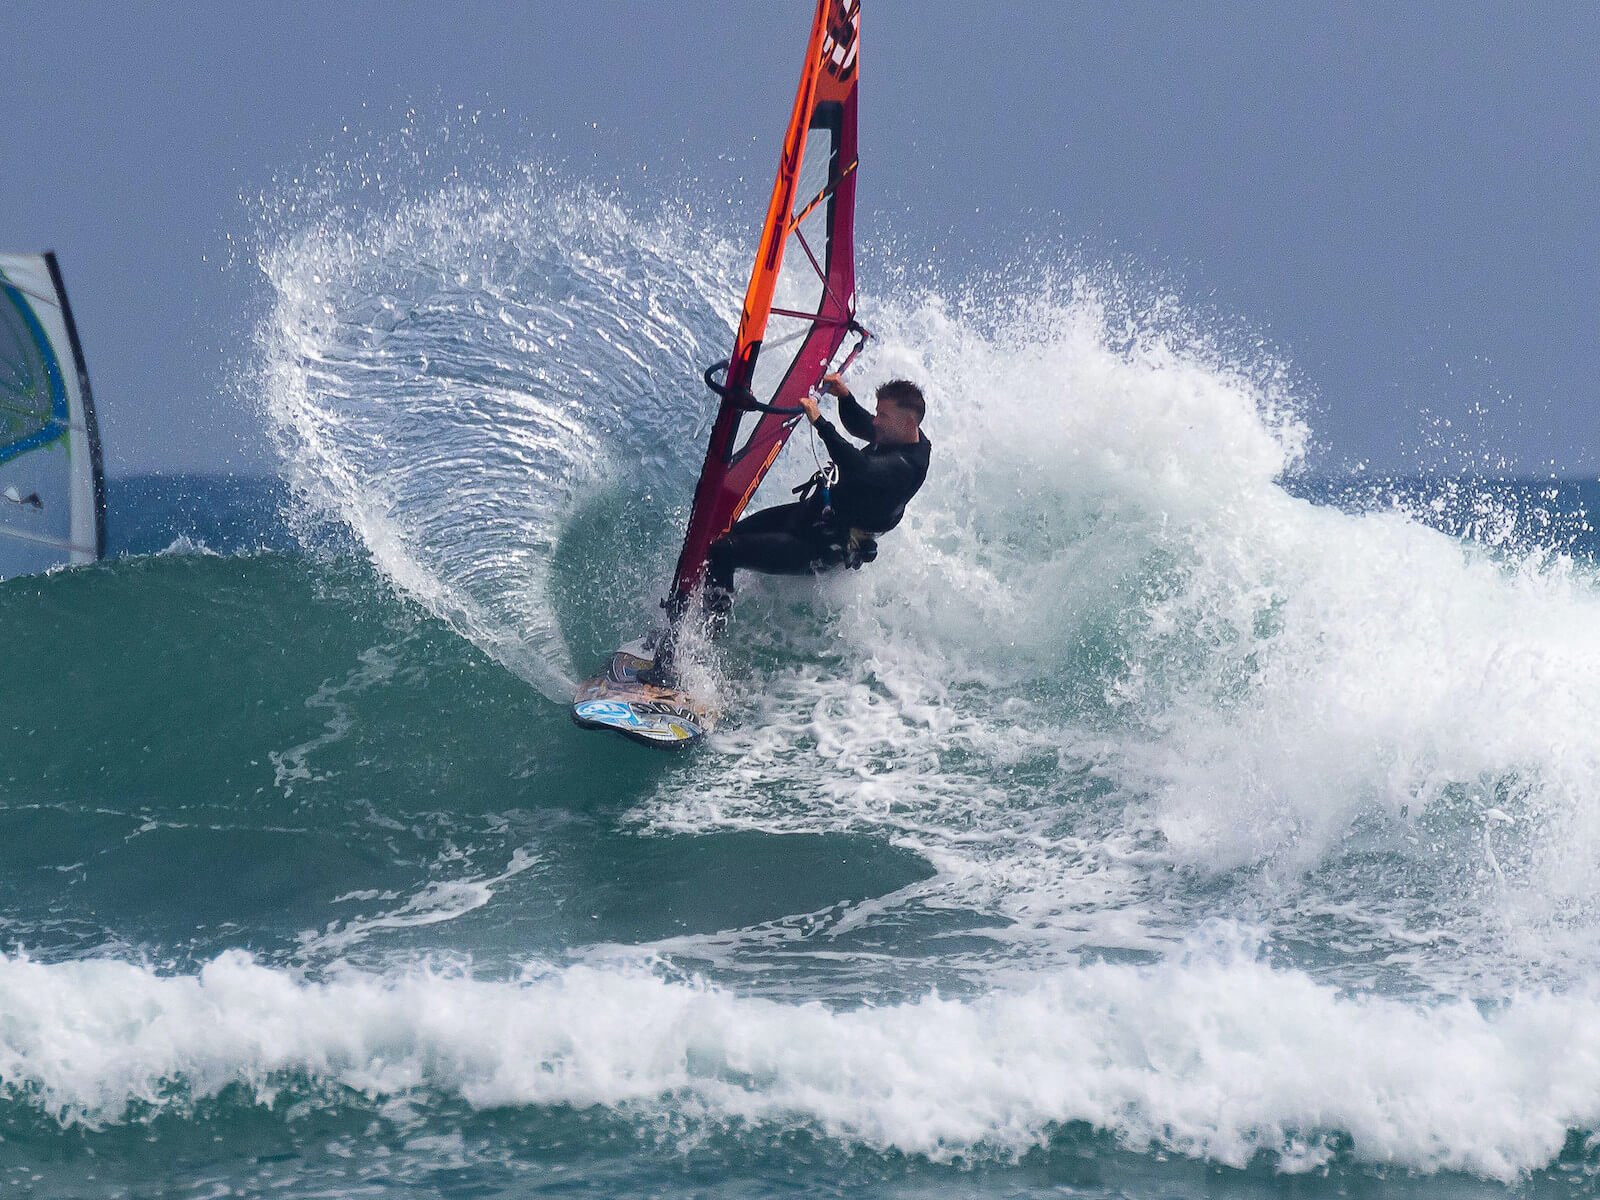 Windsurf hit lip of wave in Taranaki, New Zealand